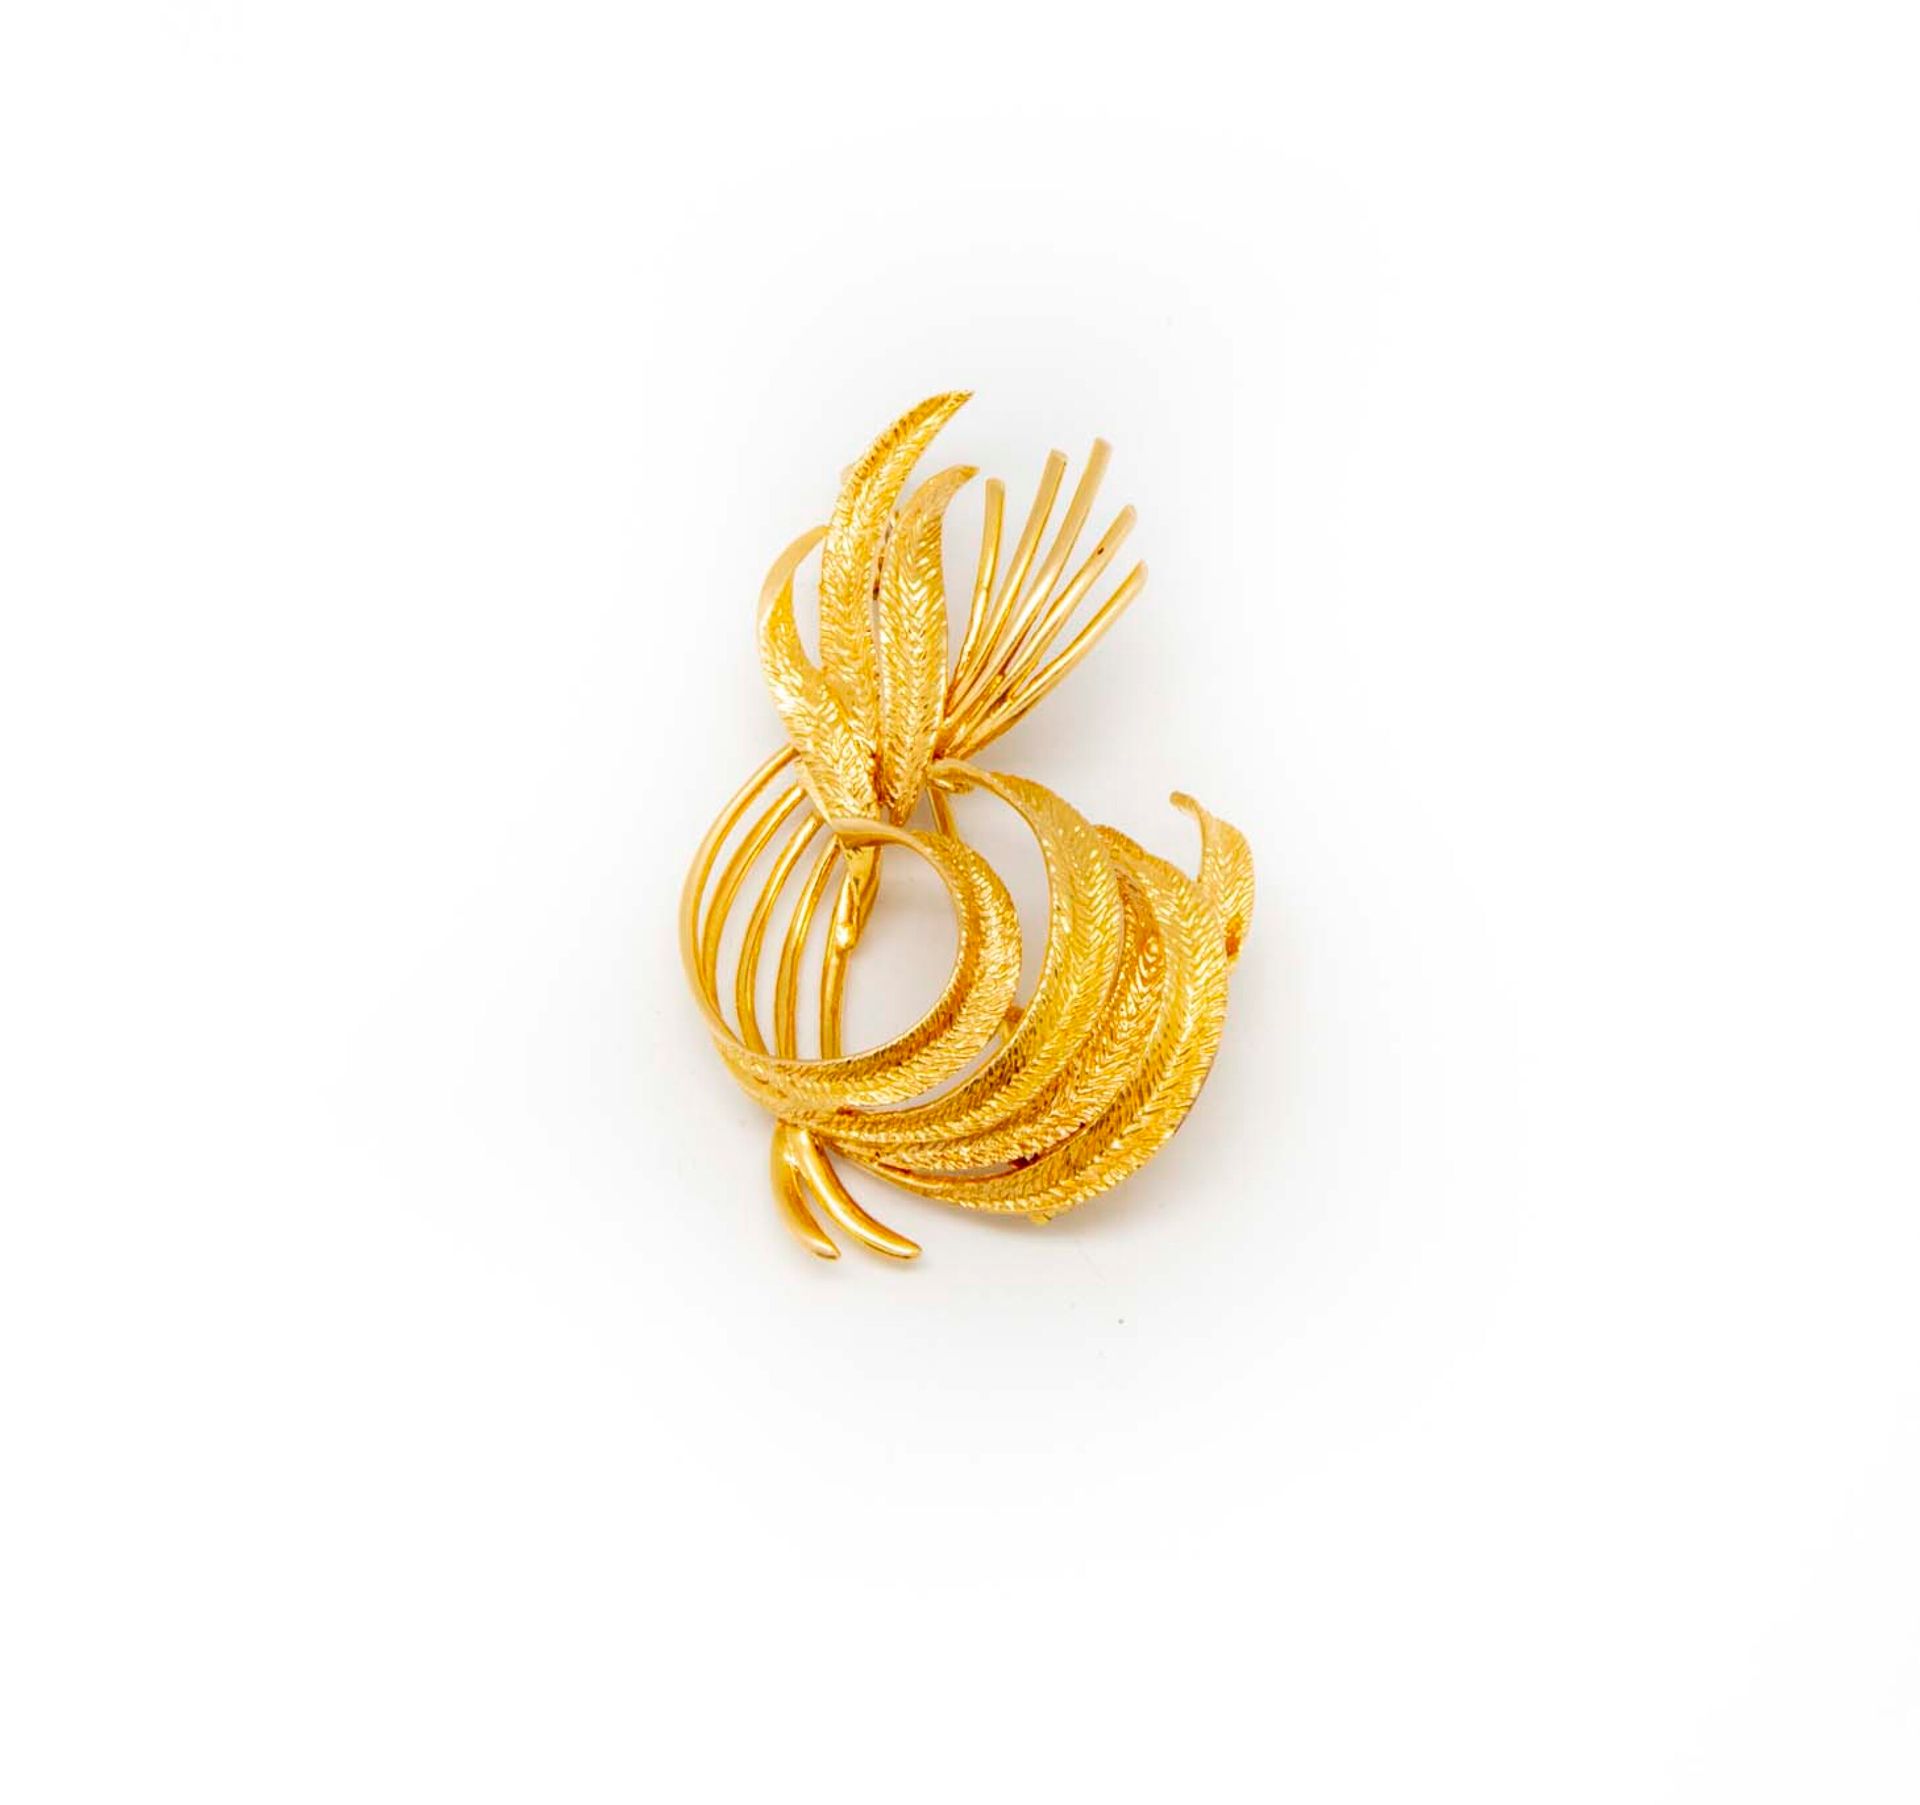 Null Broche en or jaune formant un feuillage

Poids : 9,4 g.